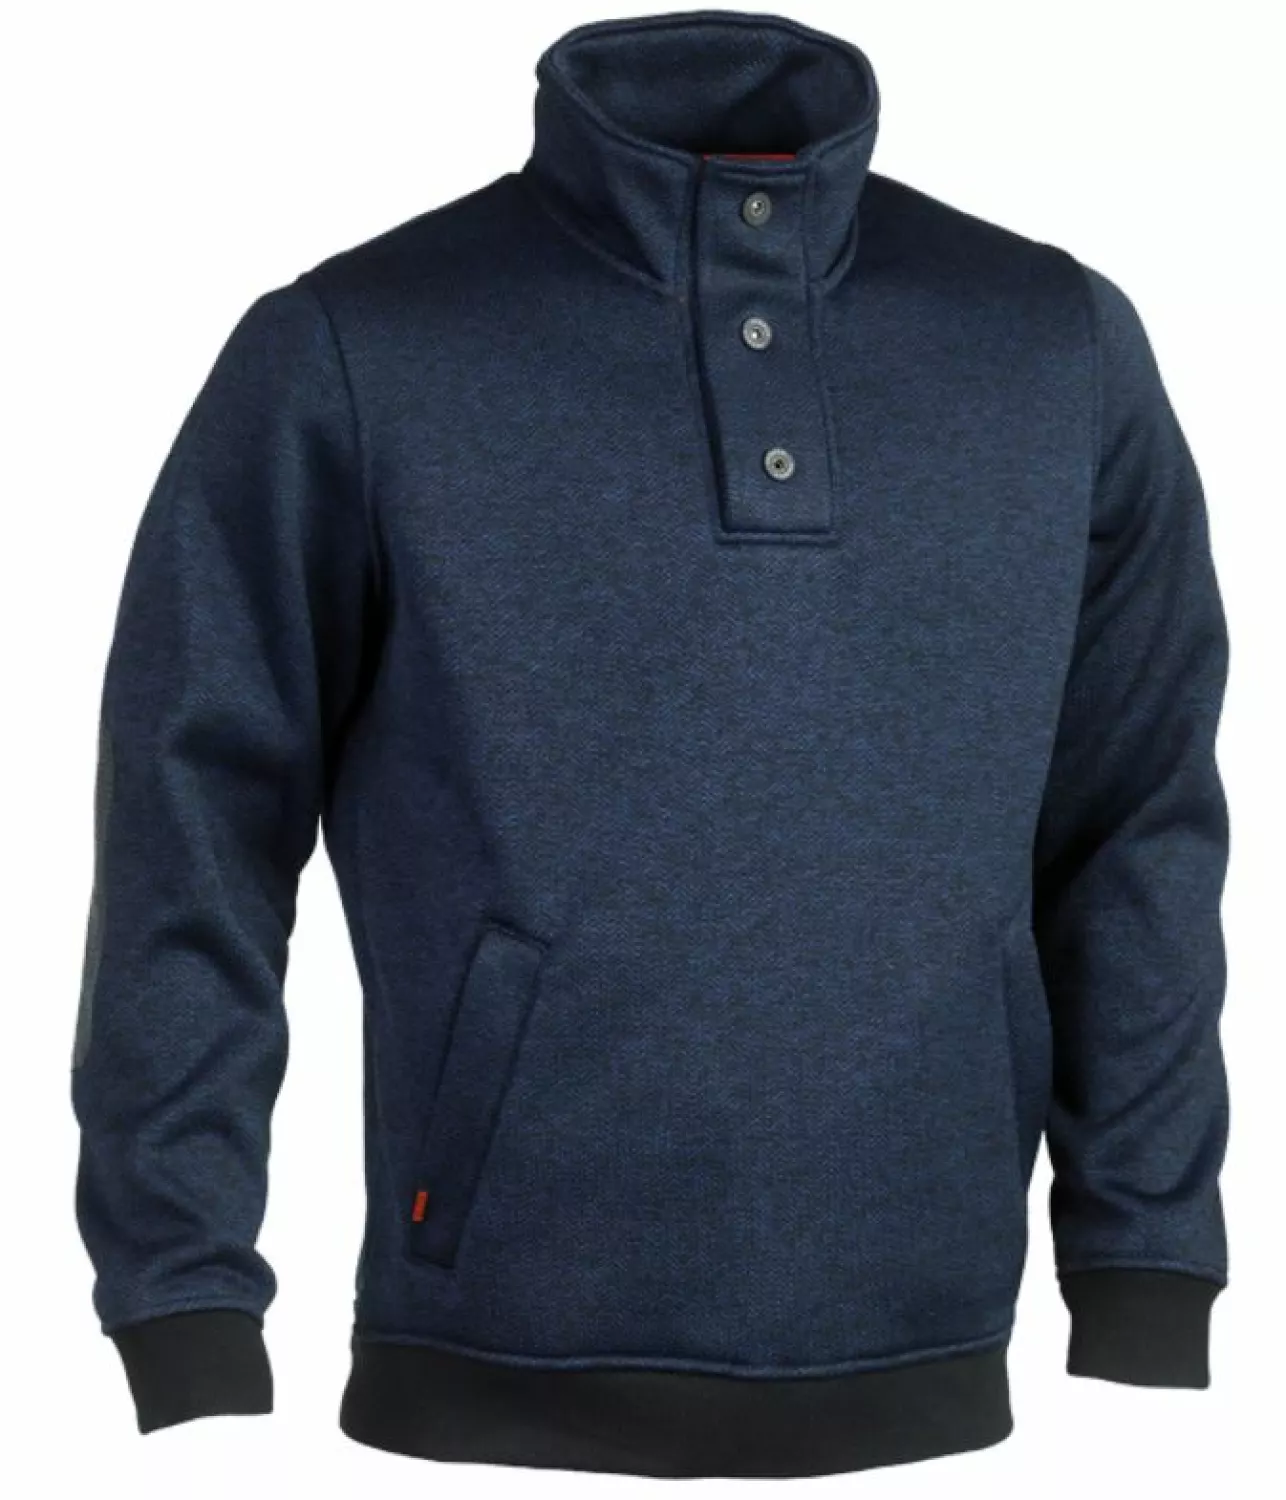 Herock Verus - Sweater - bleu - taille L - Experts-image